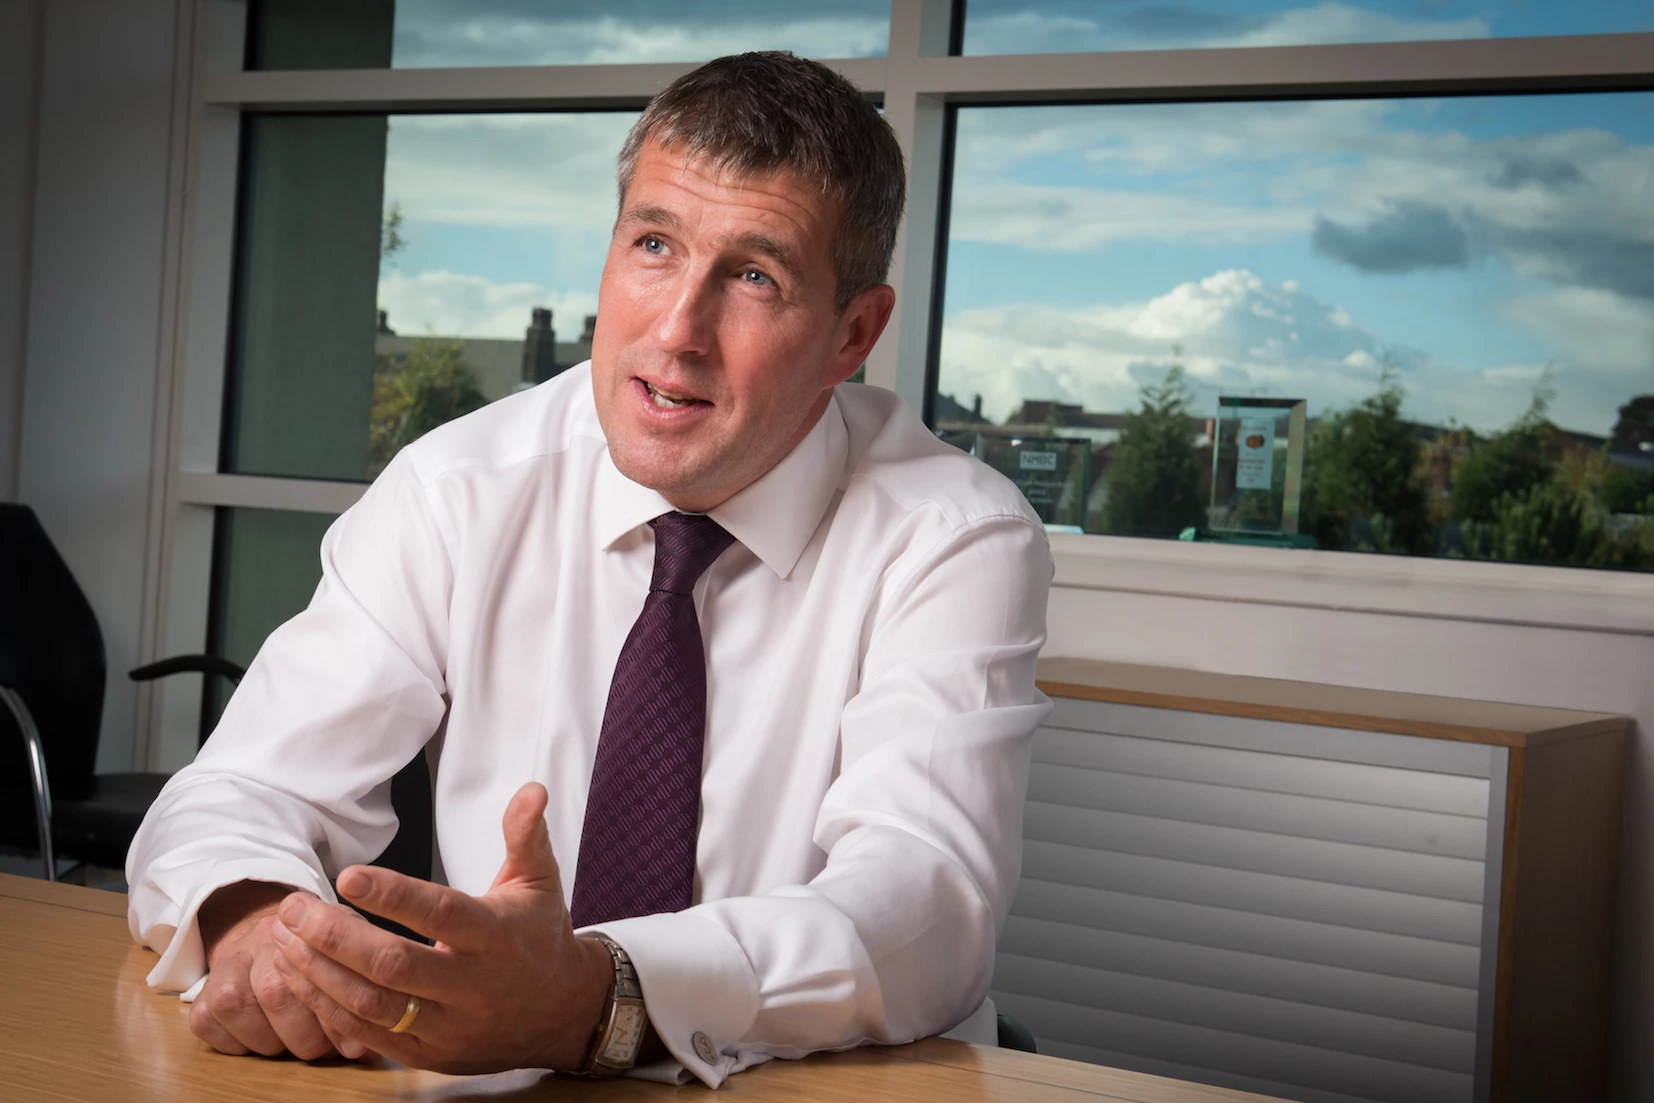 Ian Ruthven, Managing Director of Barratt Developments Yorkshire West